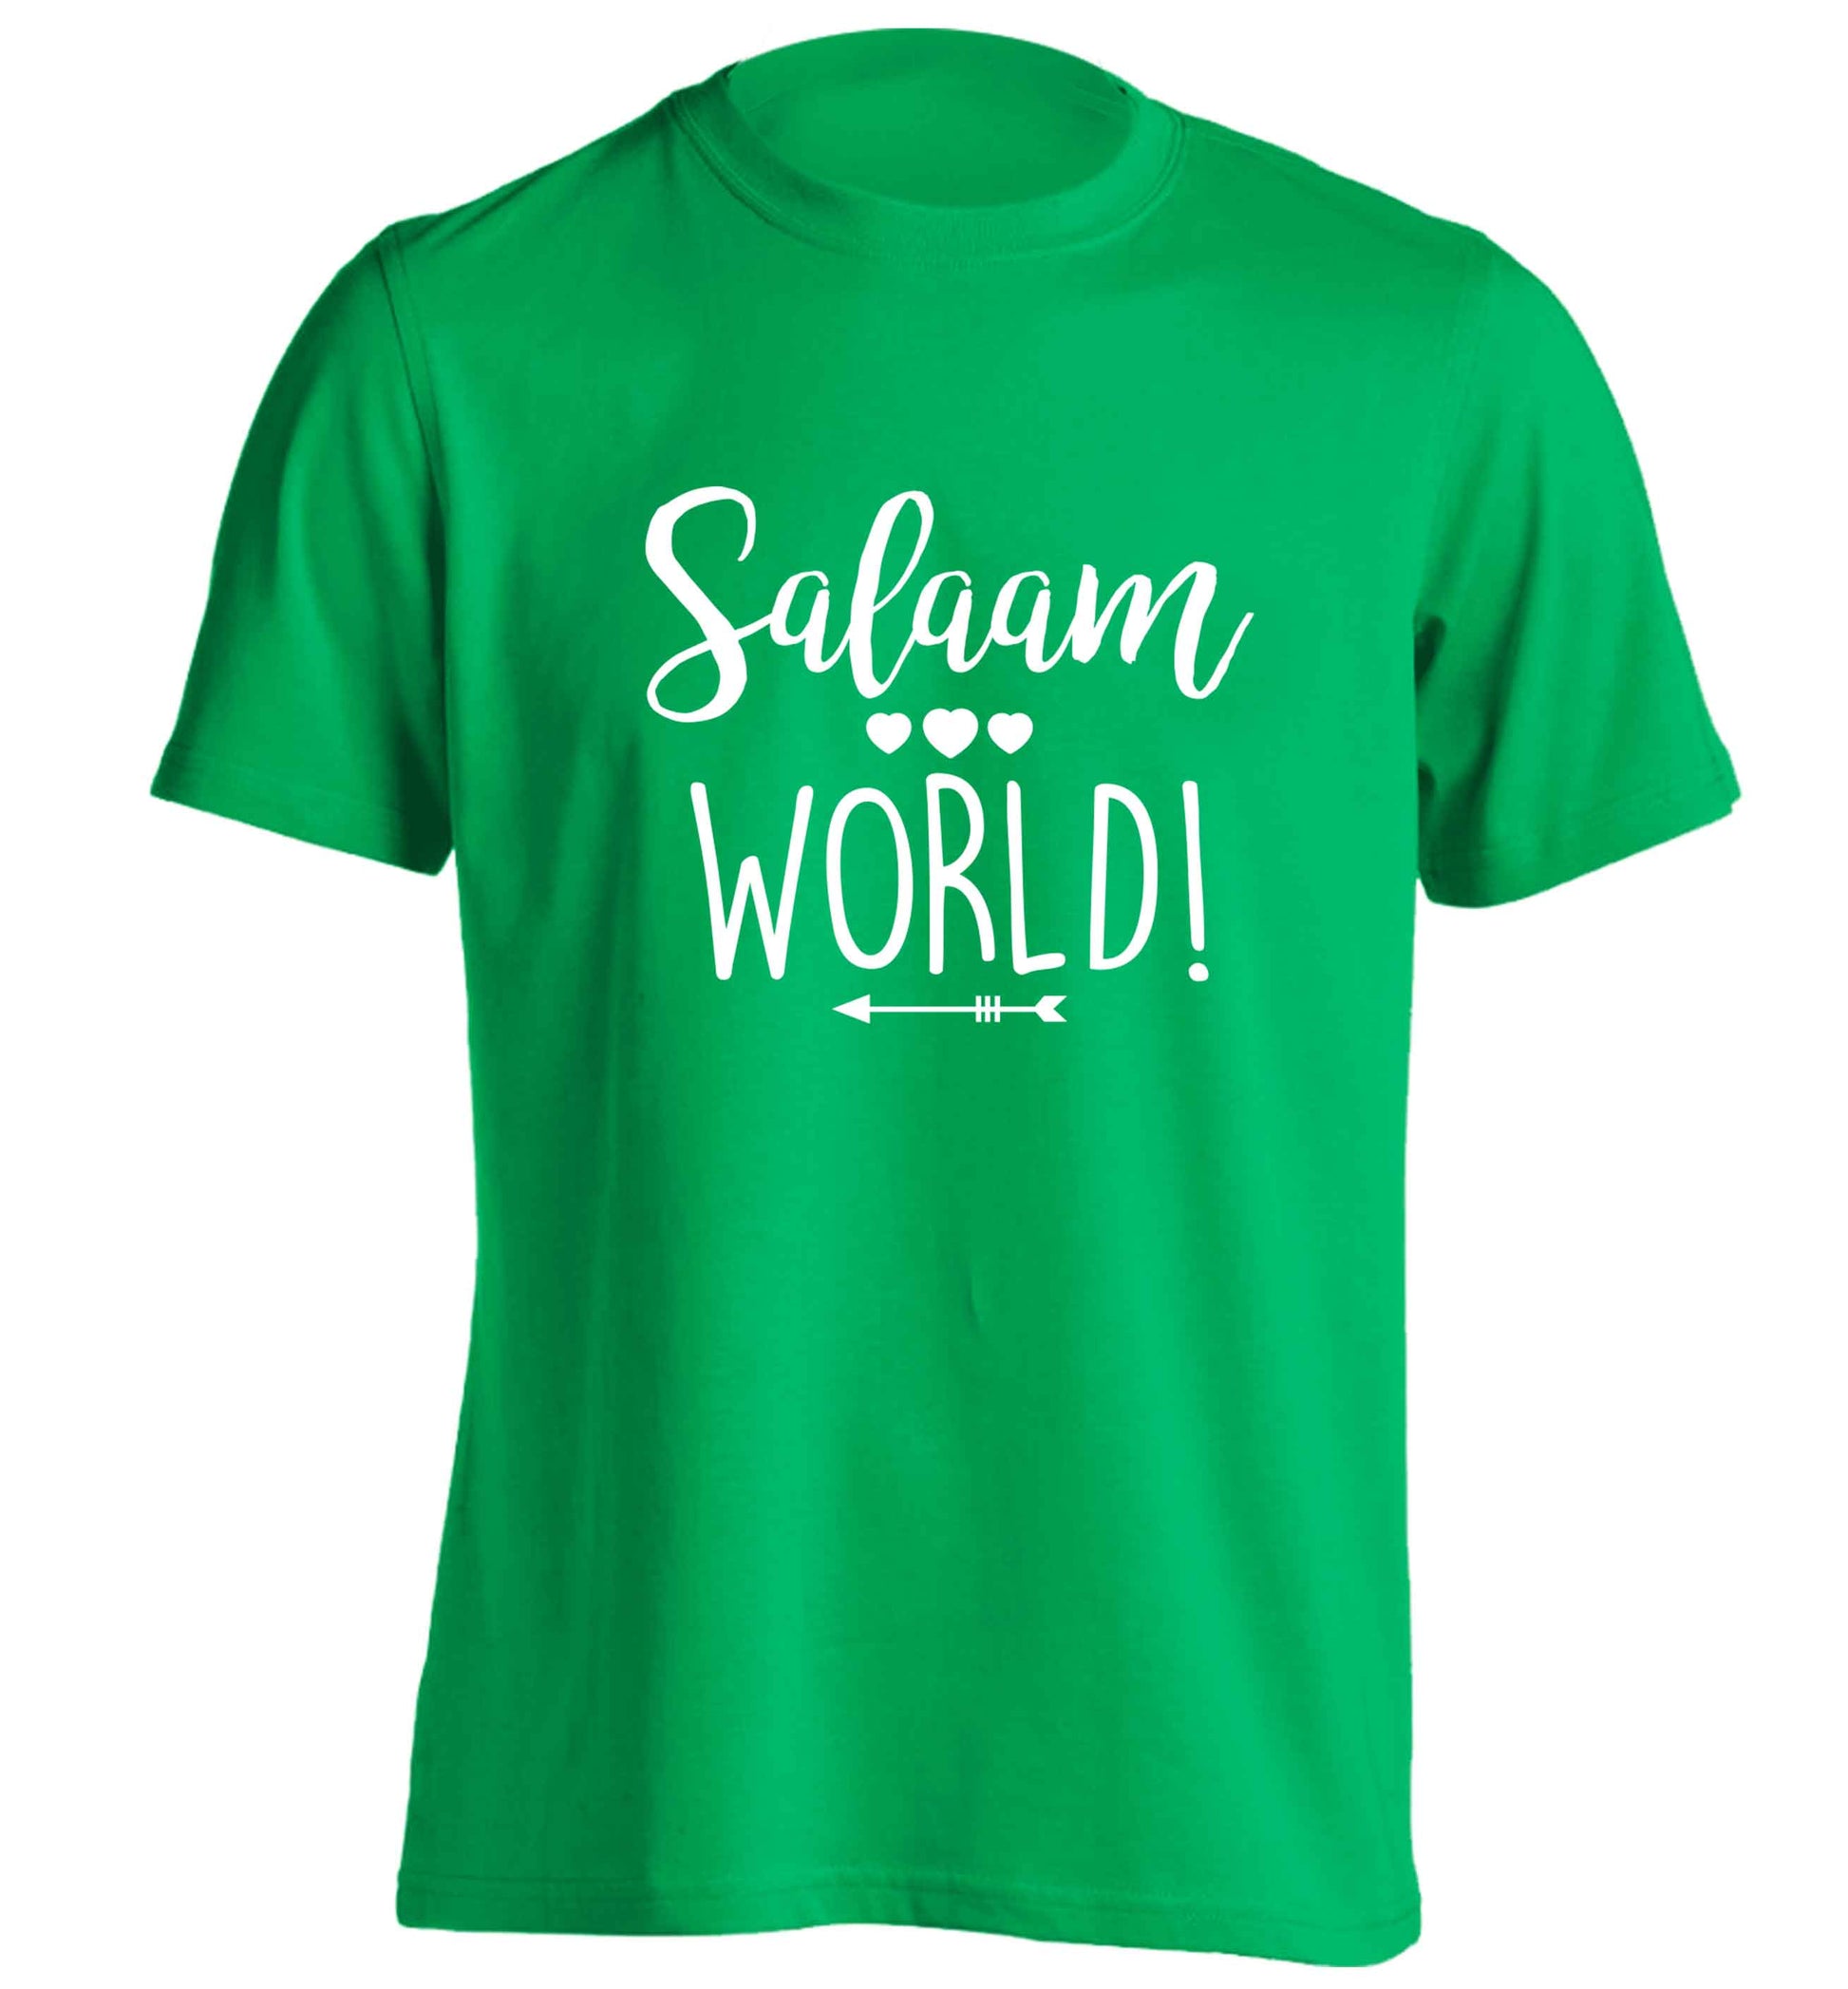 Salaam world adults unisex green Tshirt 2XL